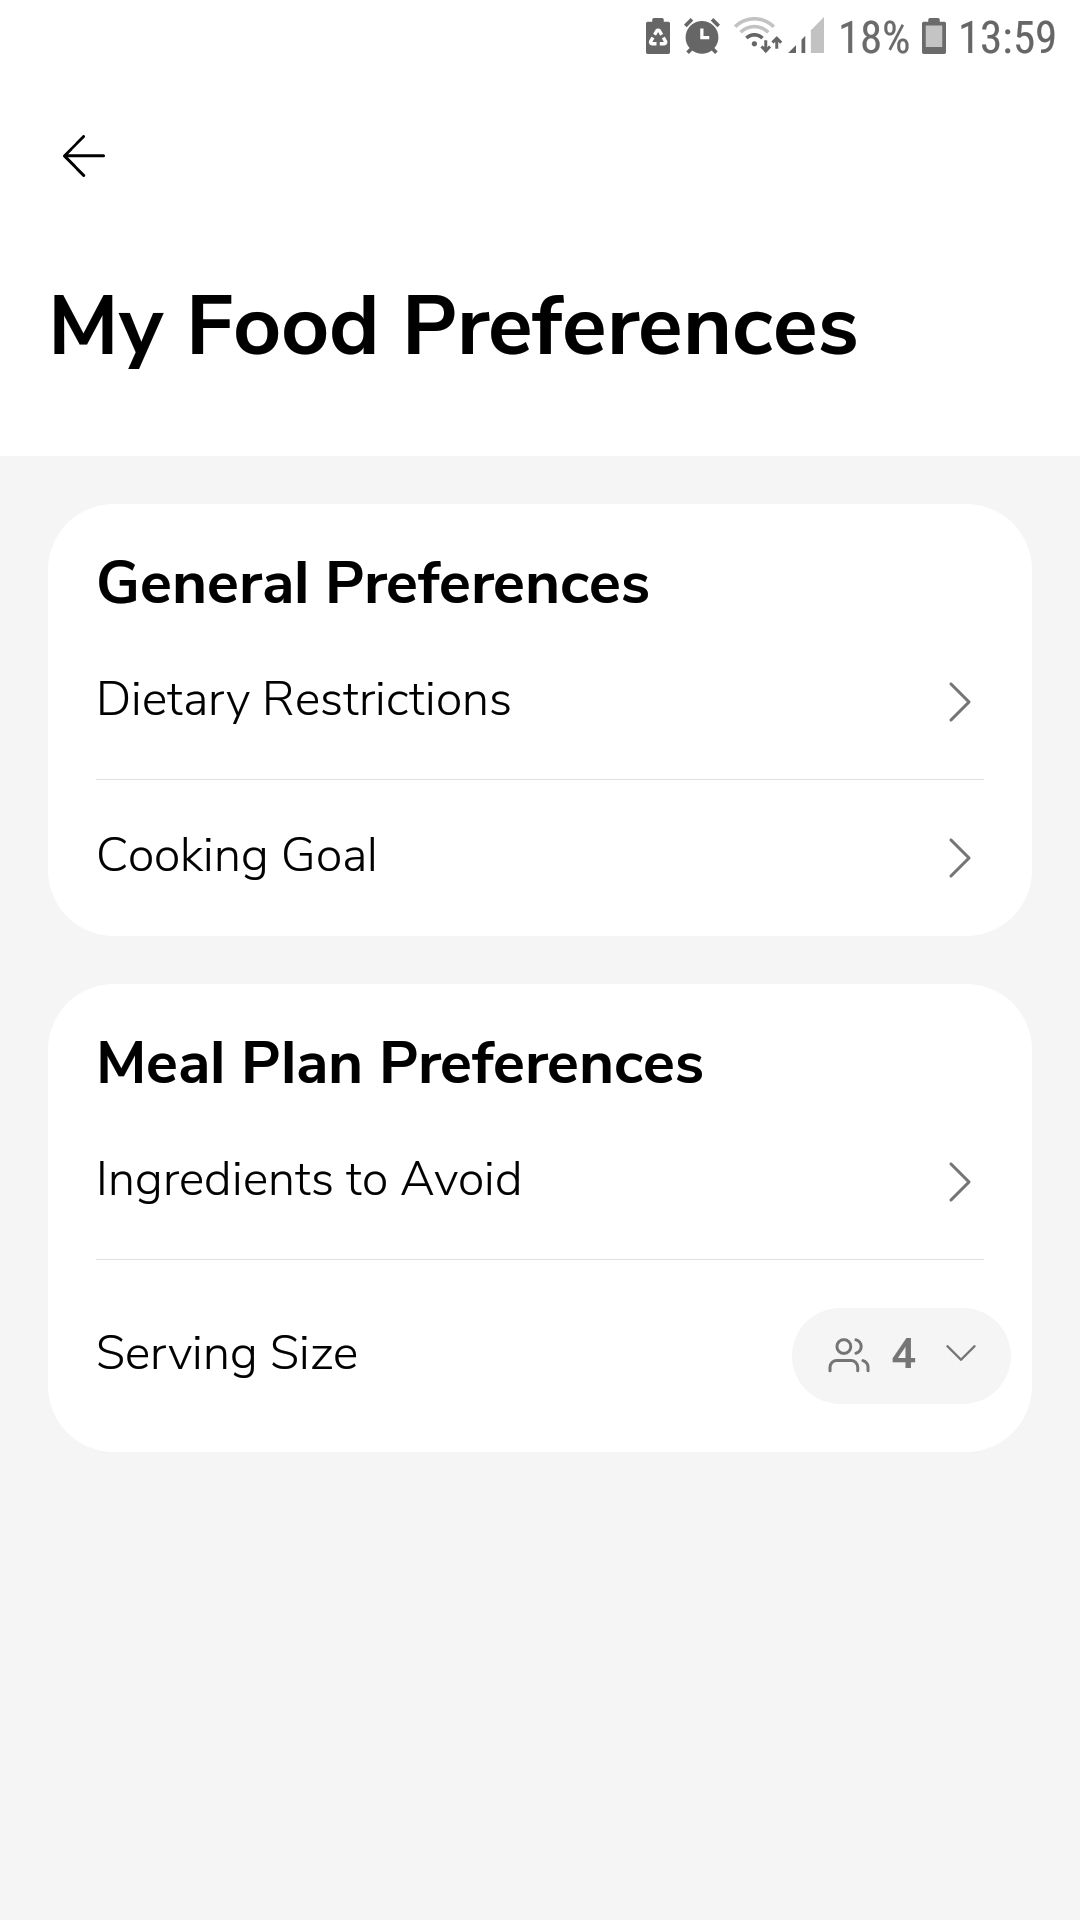 SideChef preferences mobile meal planner app